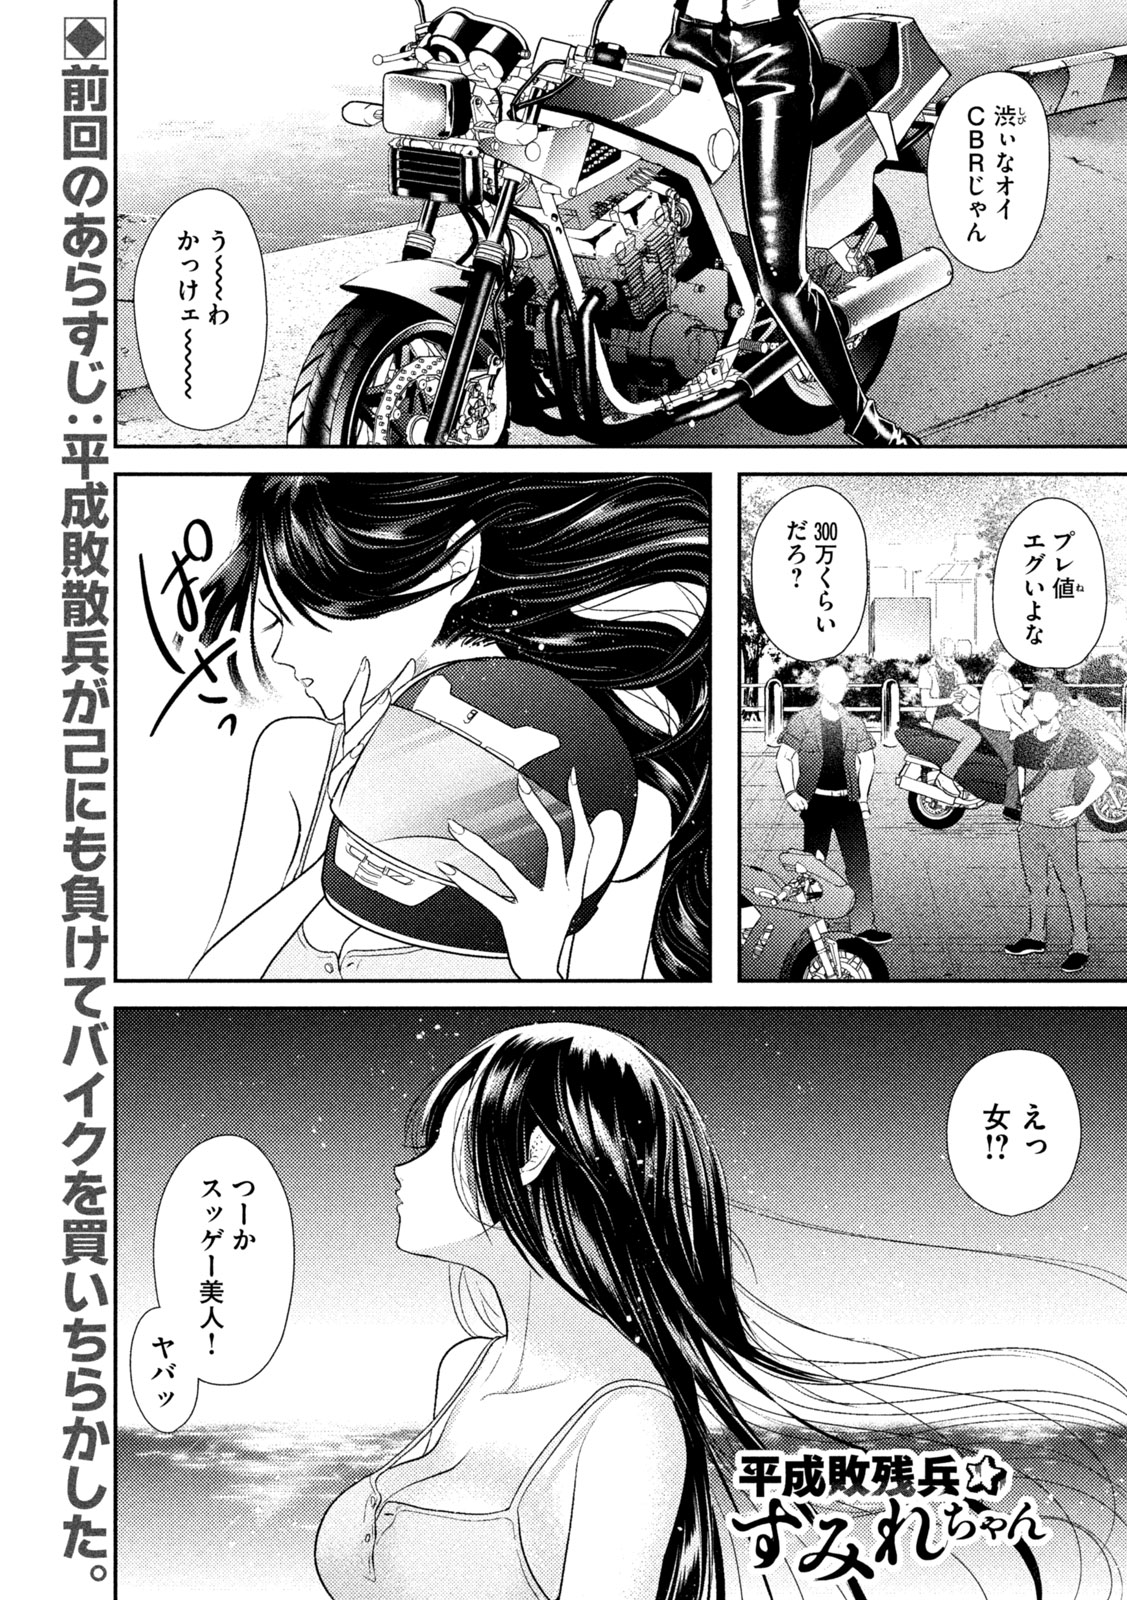 Heisei Haizanhei Sumire-chan - Chapter 12 - Page 1